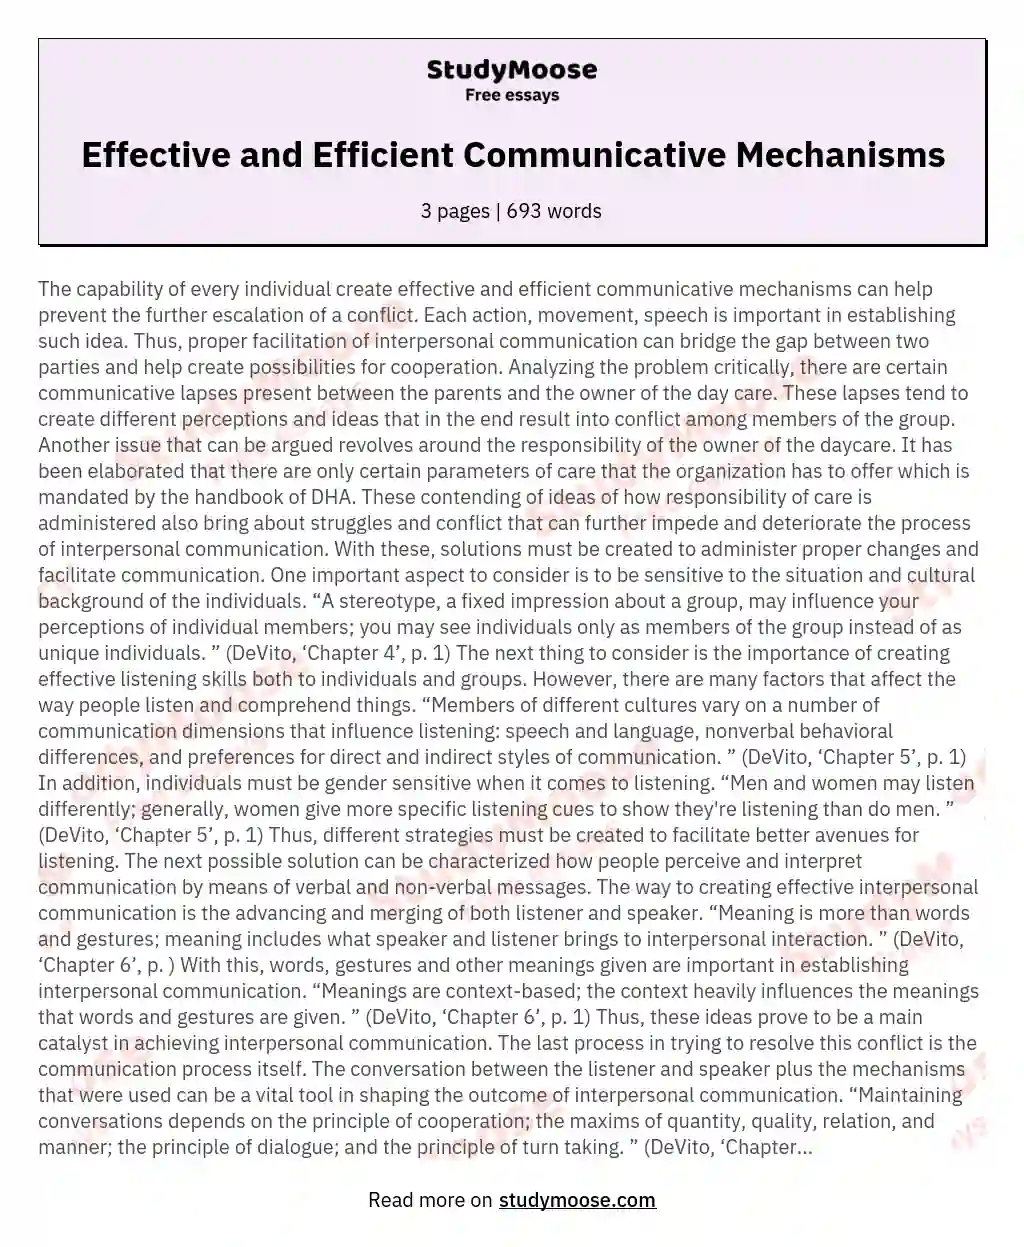 Effective and Efficient Communicative Mechanisms